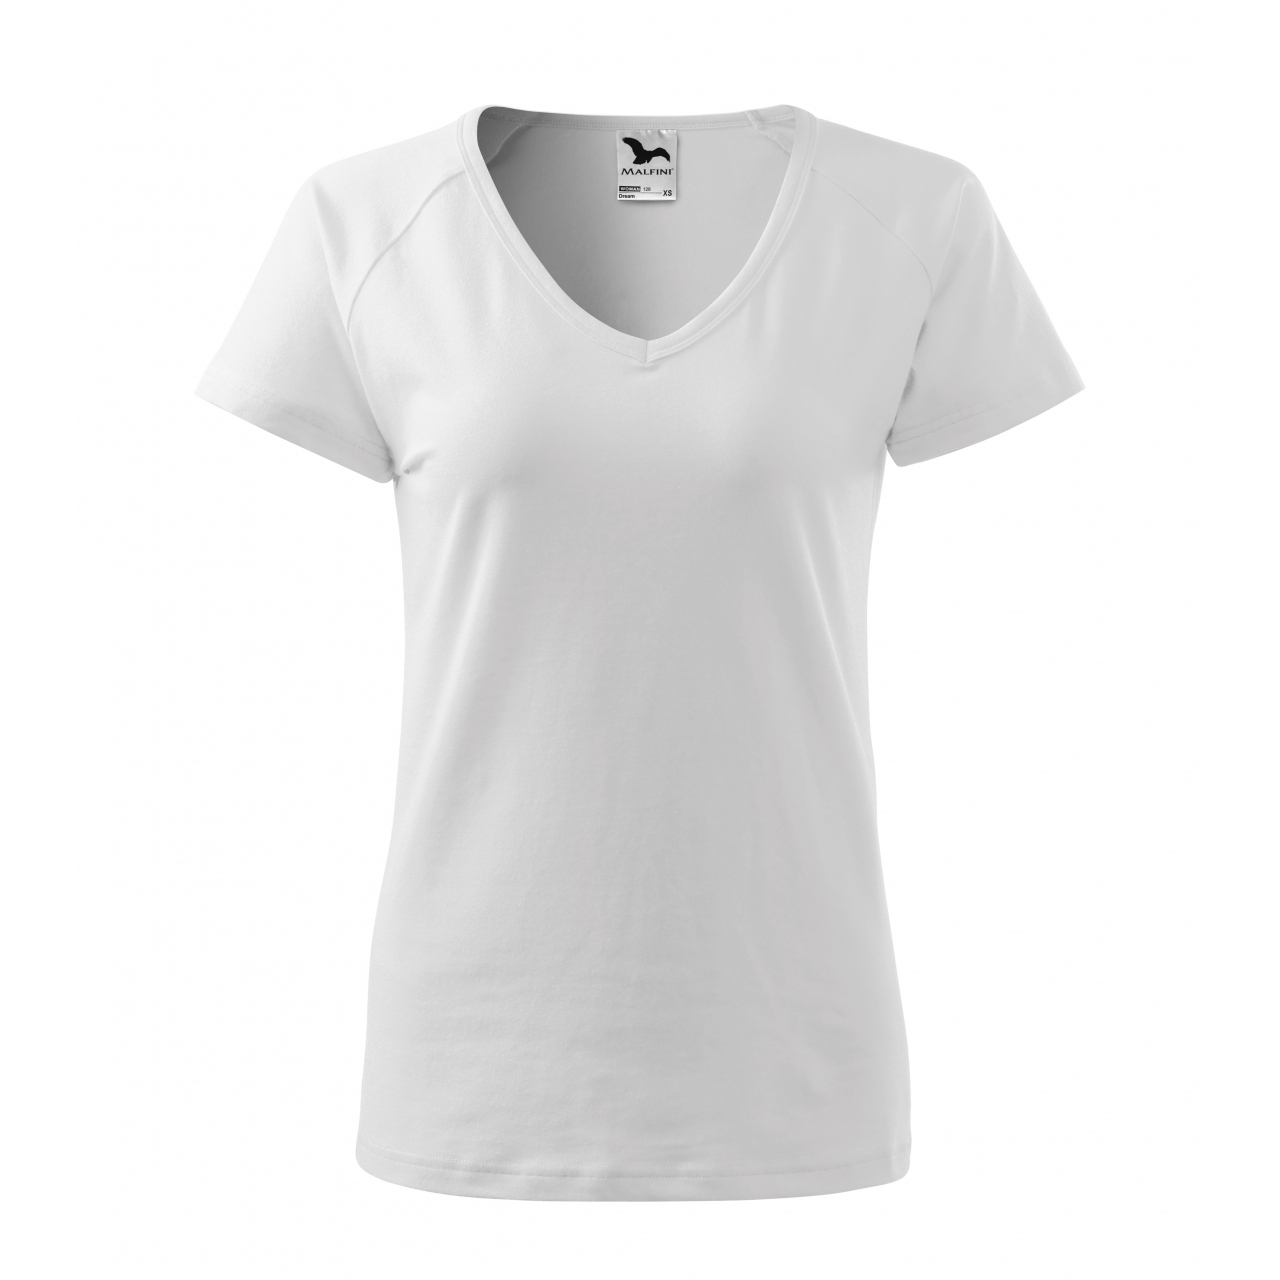 Triko dámské Malfini Dream - bílé, XL